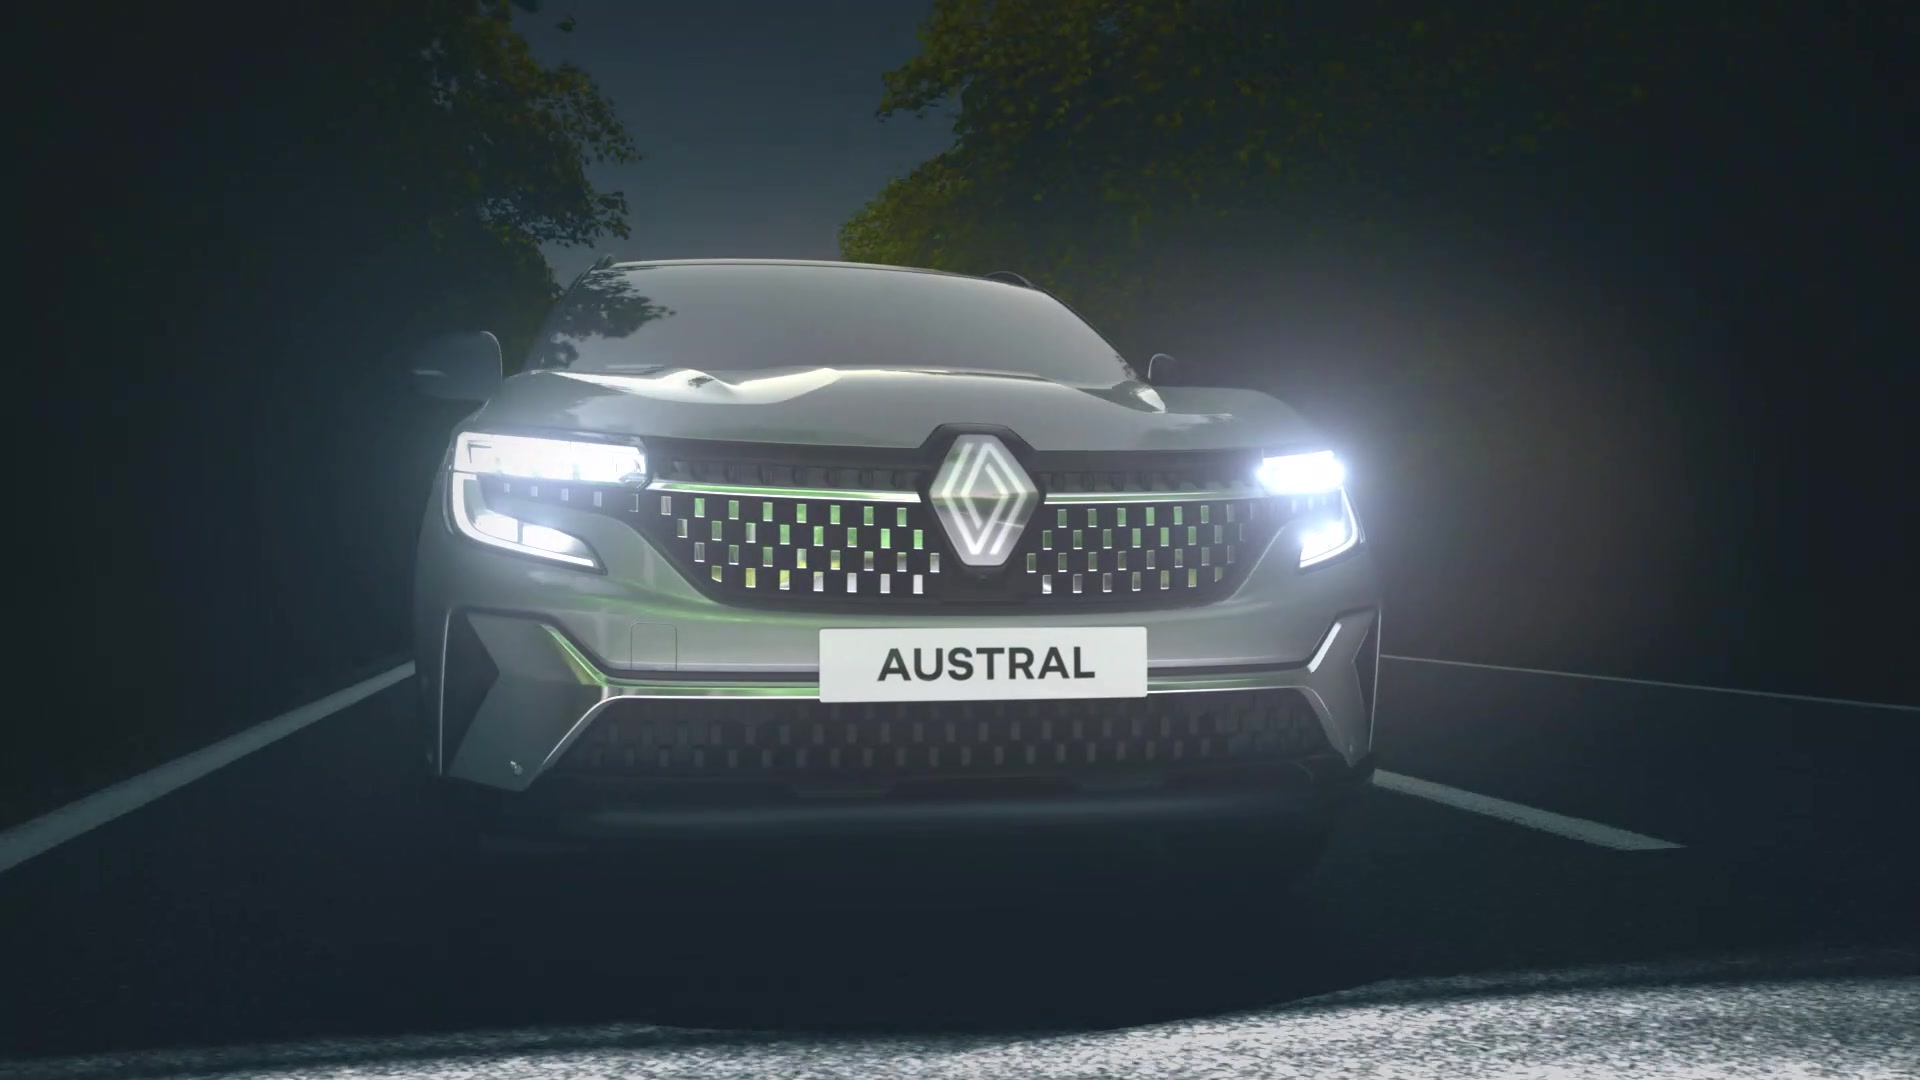 Renault Austral – Matrix Beam